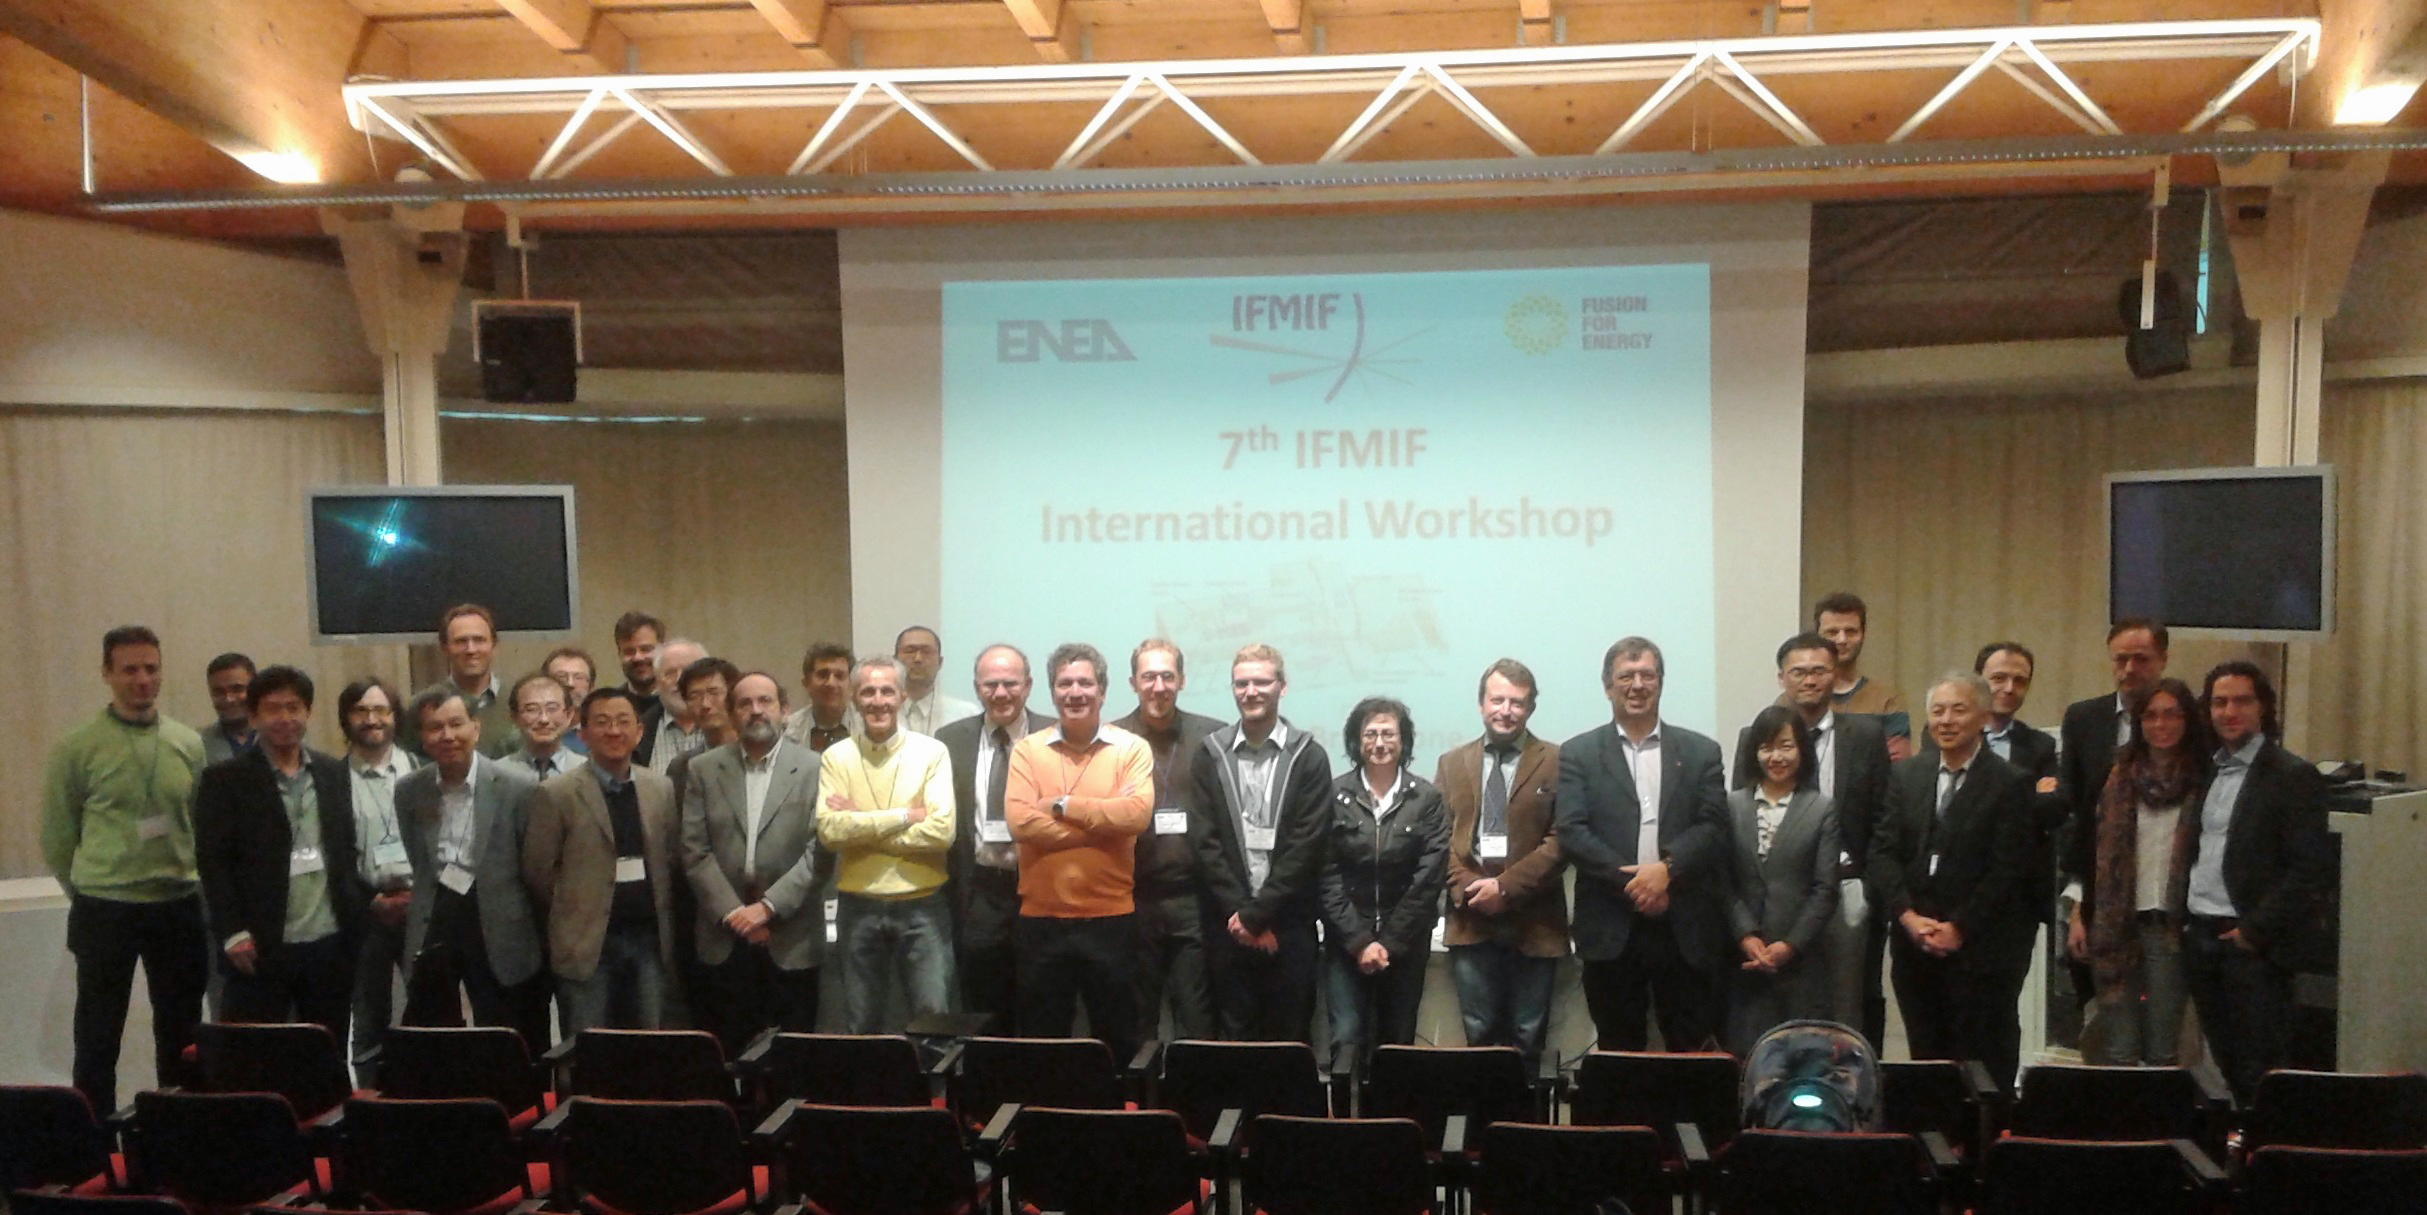 7th IFMIF Workshop@Brasimone, May22-22